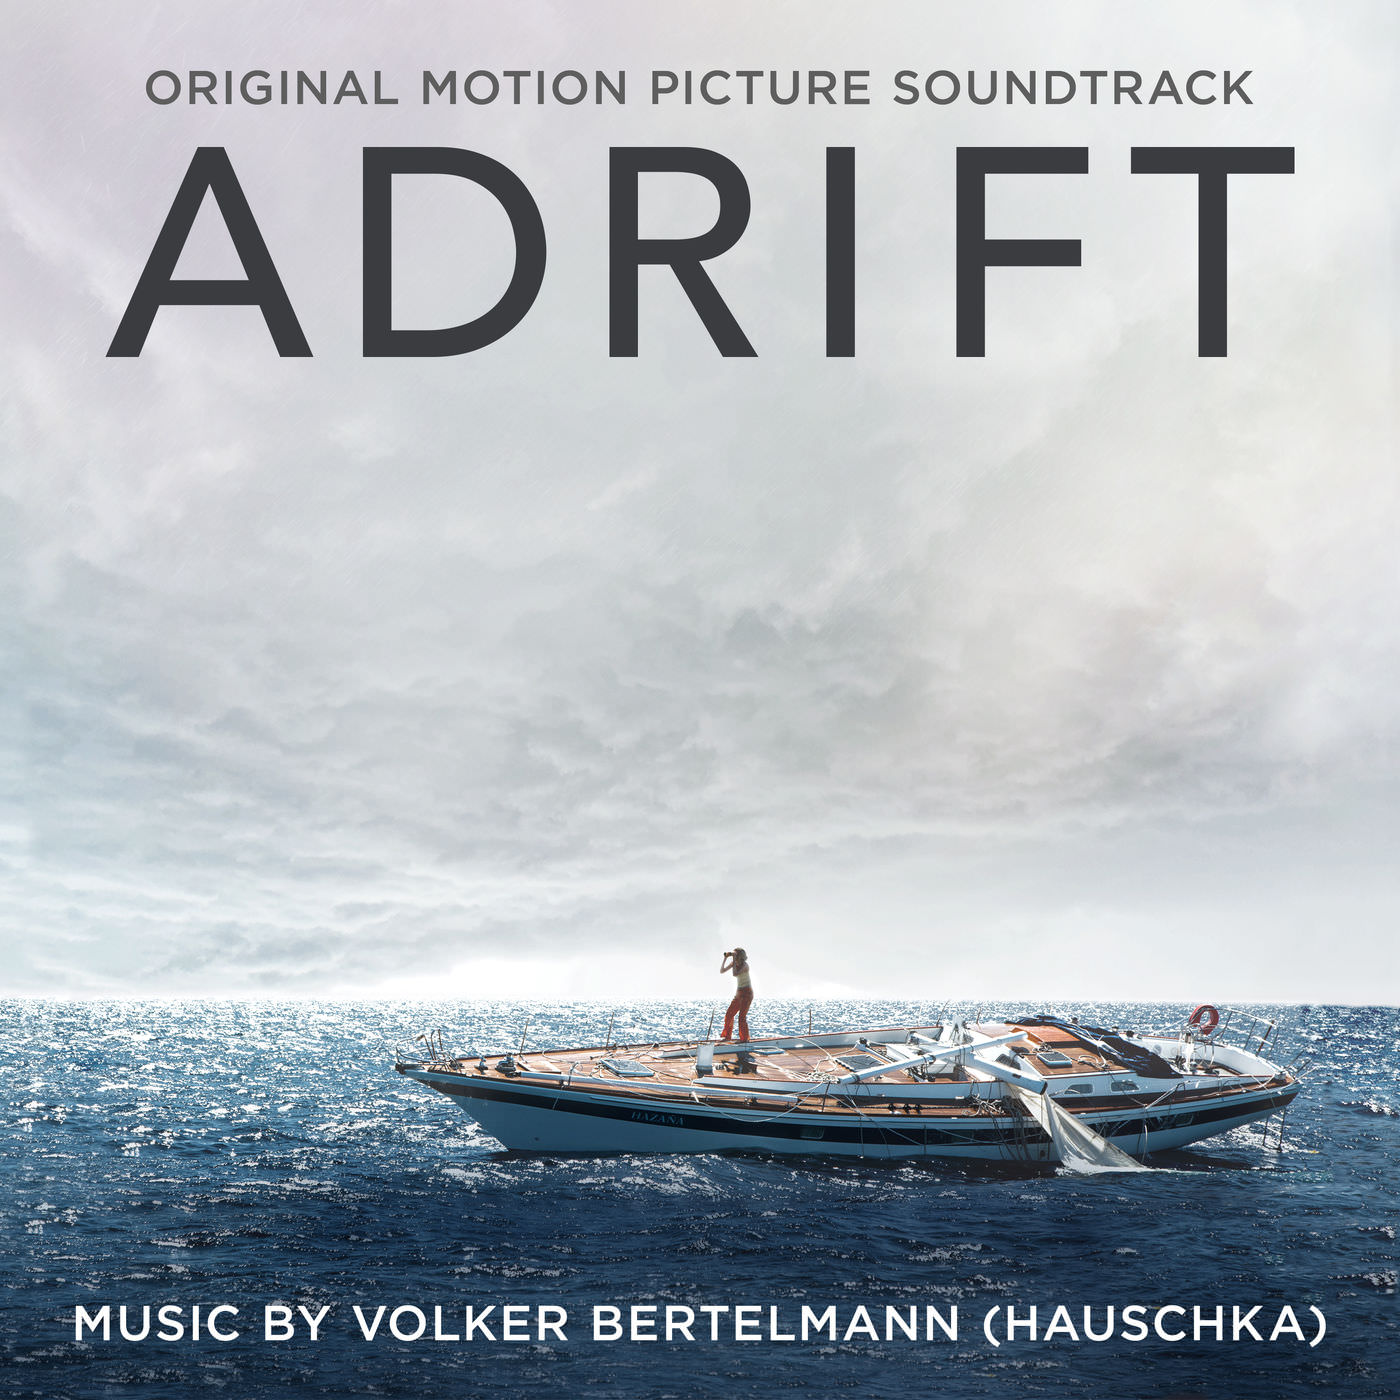 Hauschka - Adrift (Original Motion Picture Soundtrack) (2018) [FLAC 24bit/48kHz]